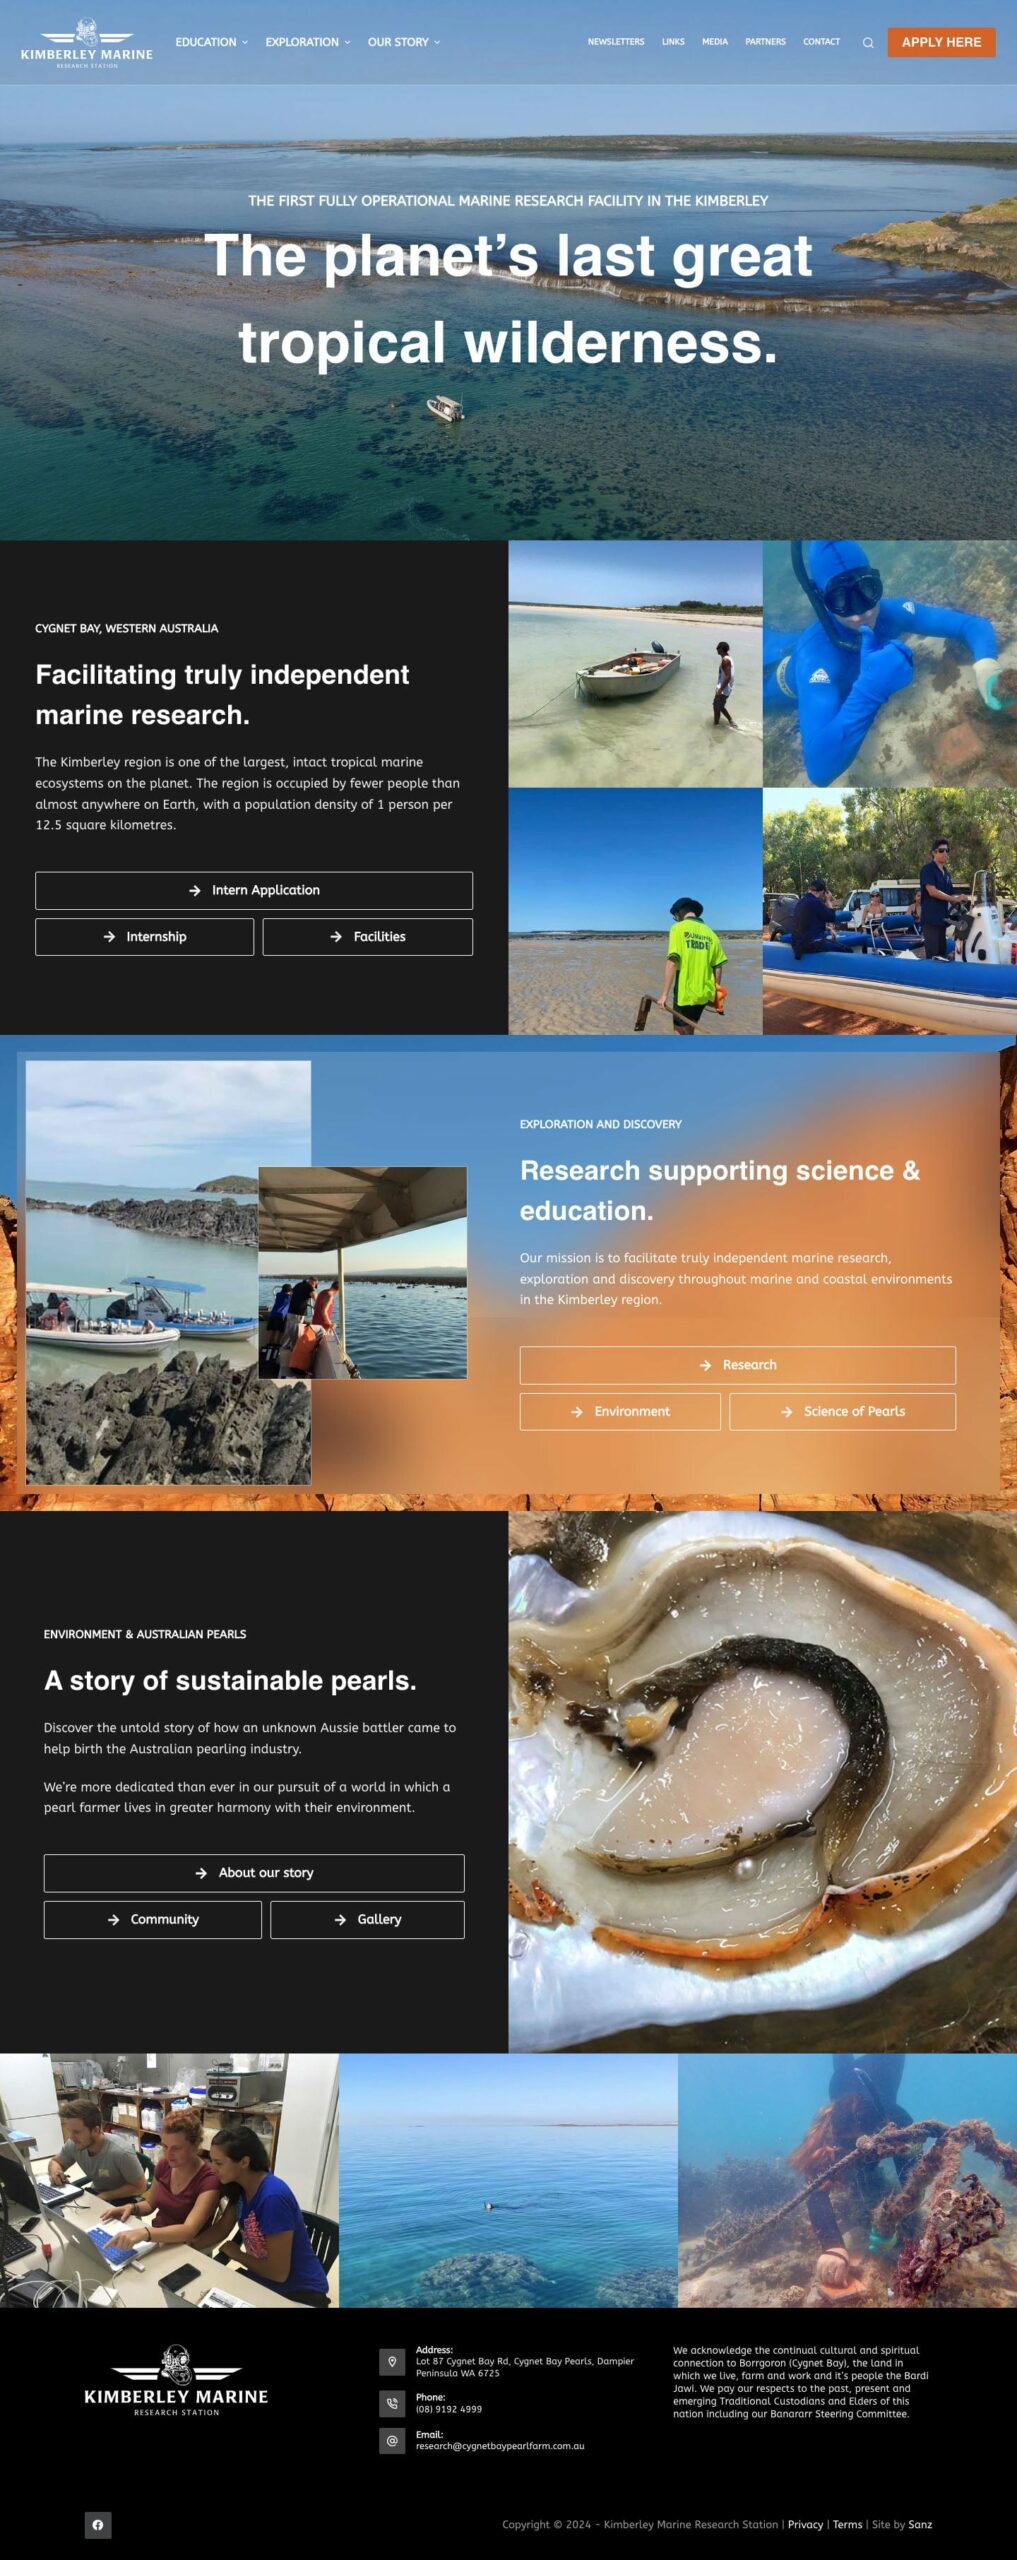 Kimberley Marine Research Station website screenshot.